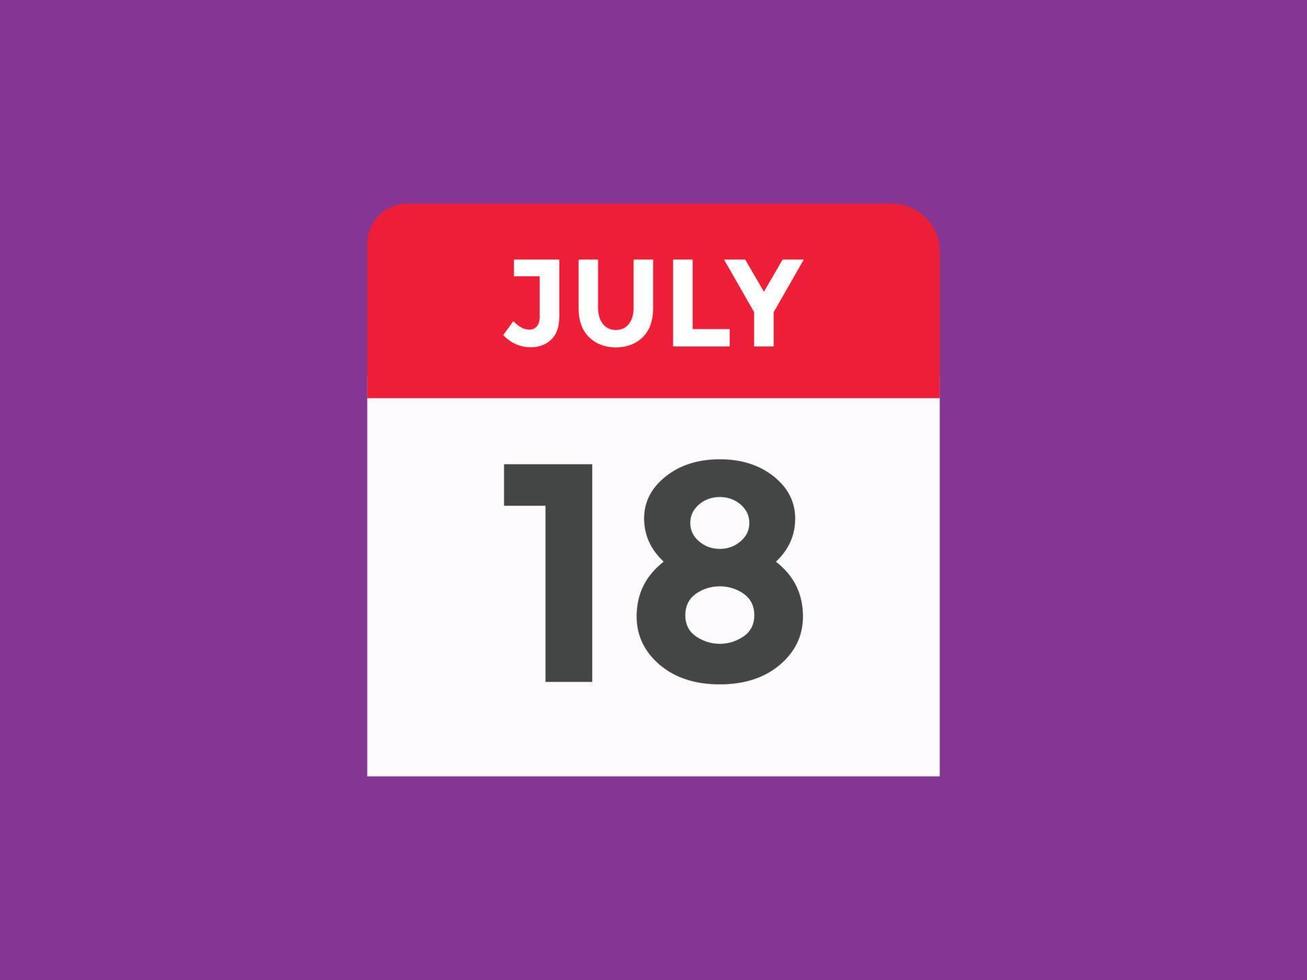 july 18 calendar reminder. 18th july daily calendar icon template. Calendar 18th july icon Design template. Vector illustration